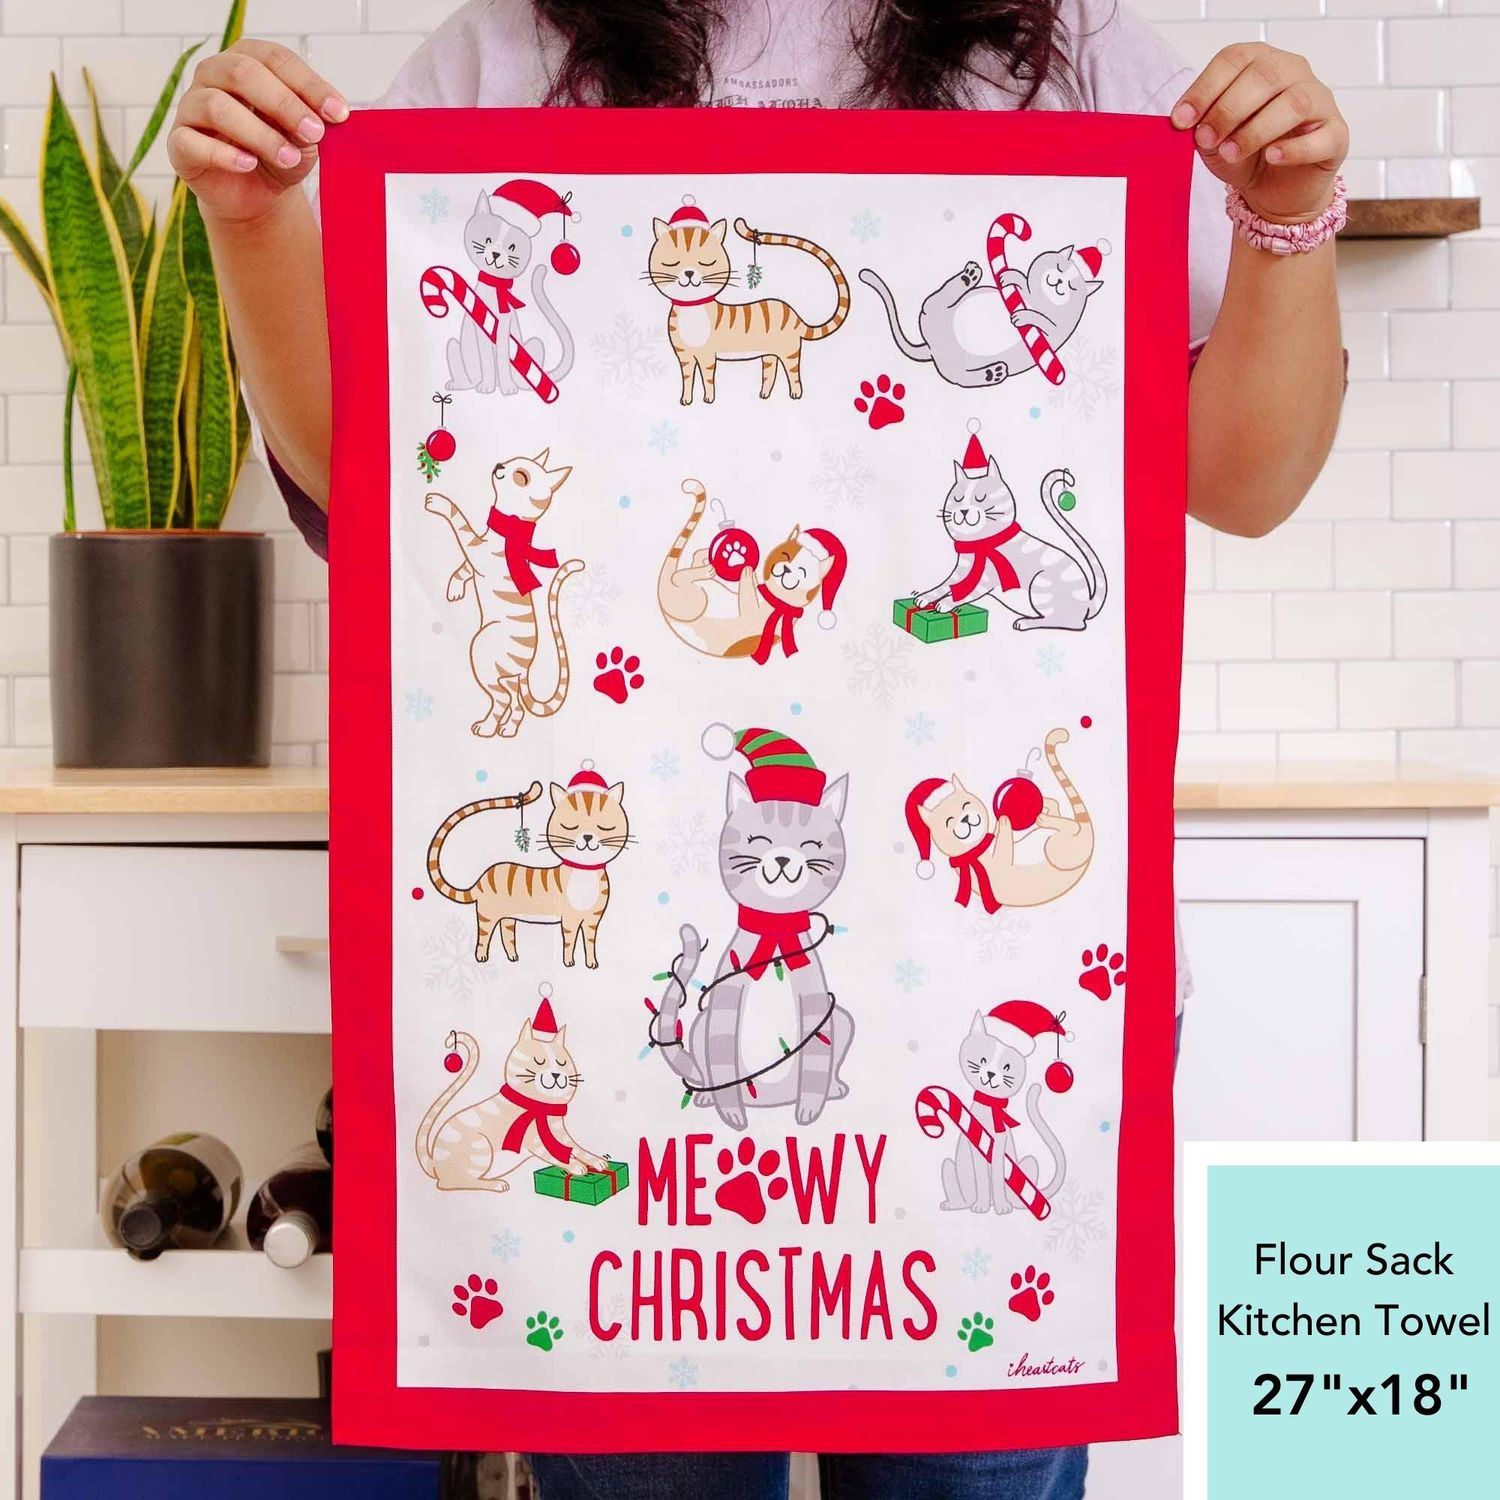 Meowy Christmas Holiday Towel – 100% Cotton Flour Sack Kitchen Dish Towel 27″ x 18″